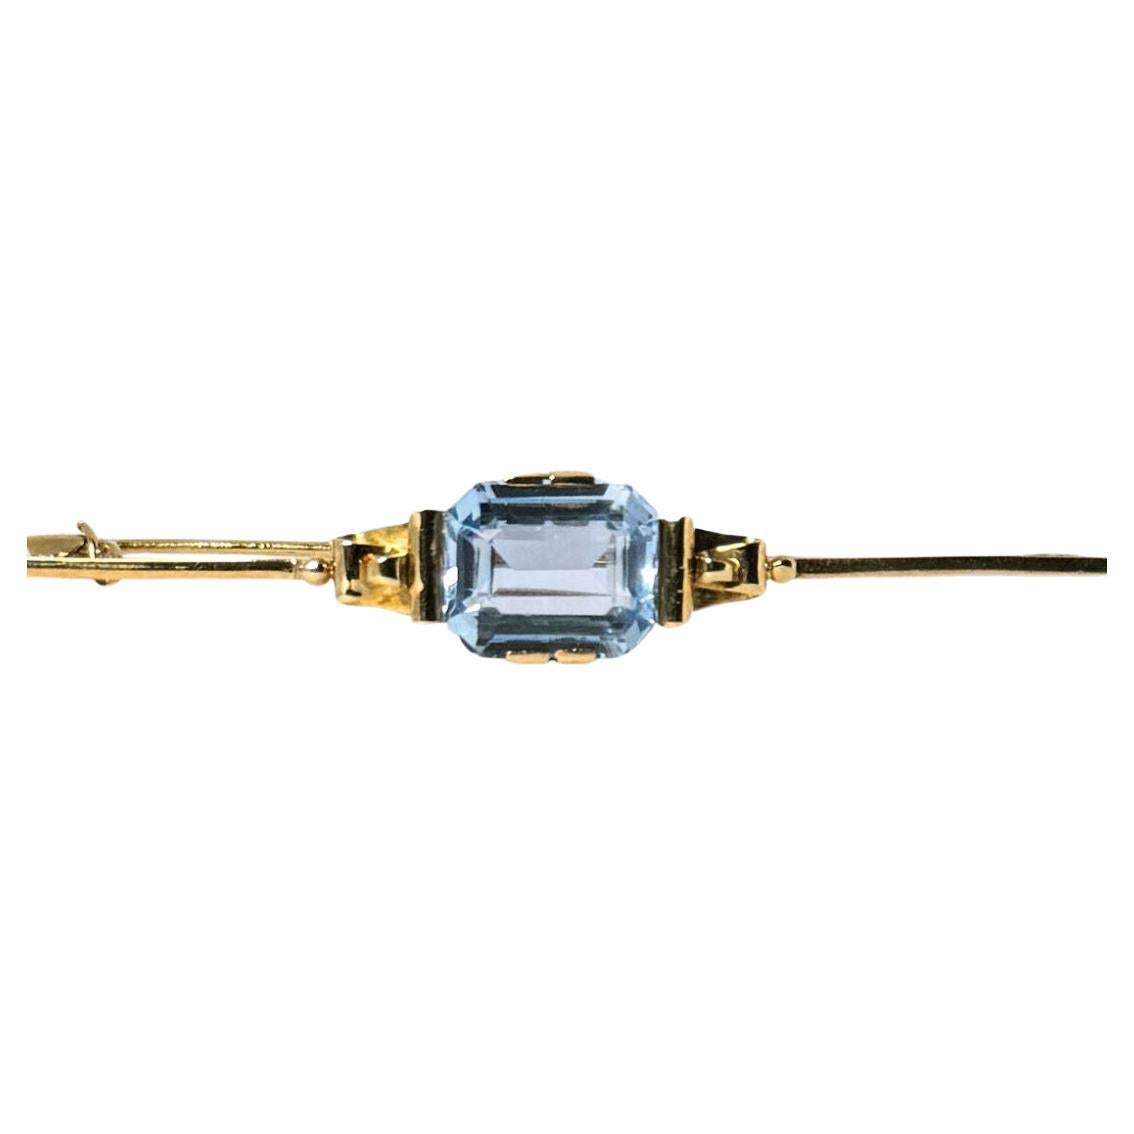 European vintage pin 14 carat gold with blue topaz